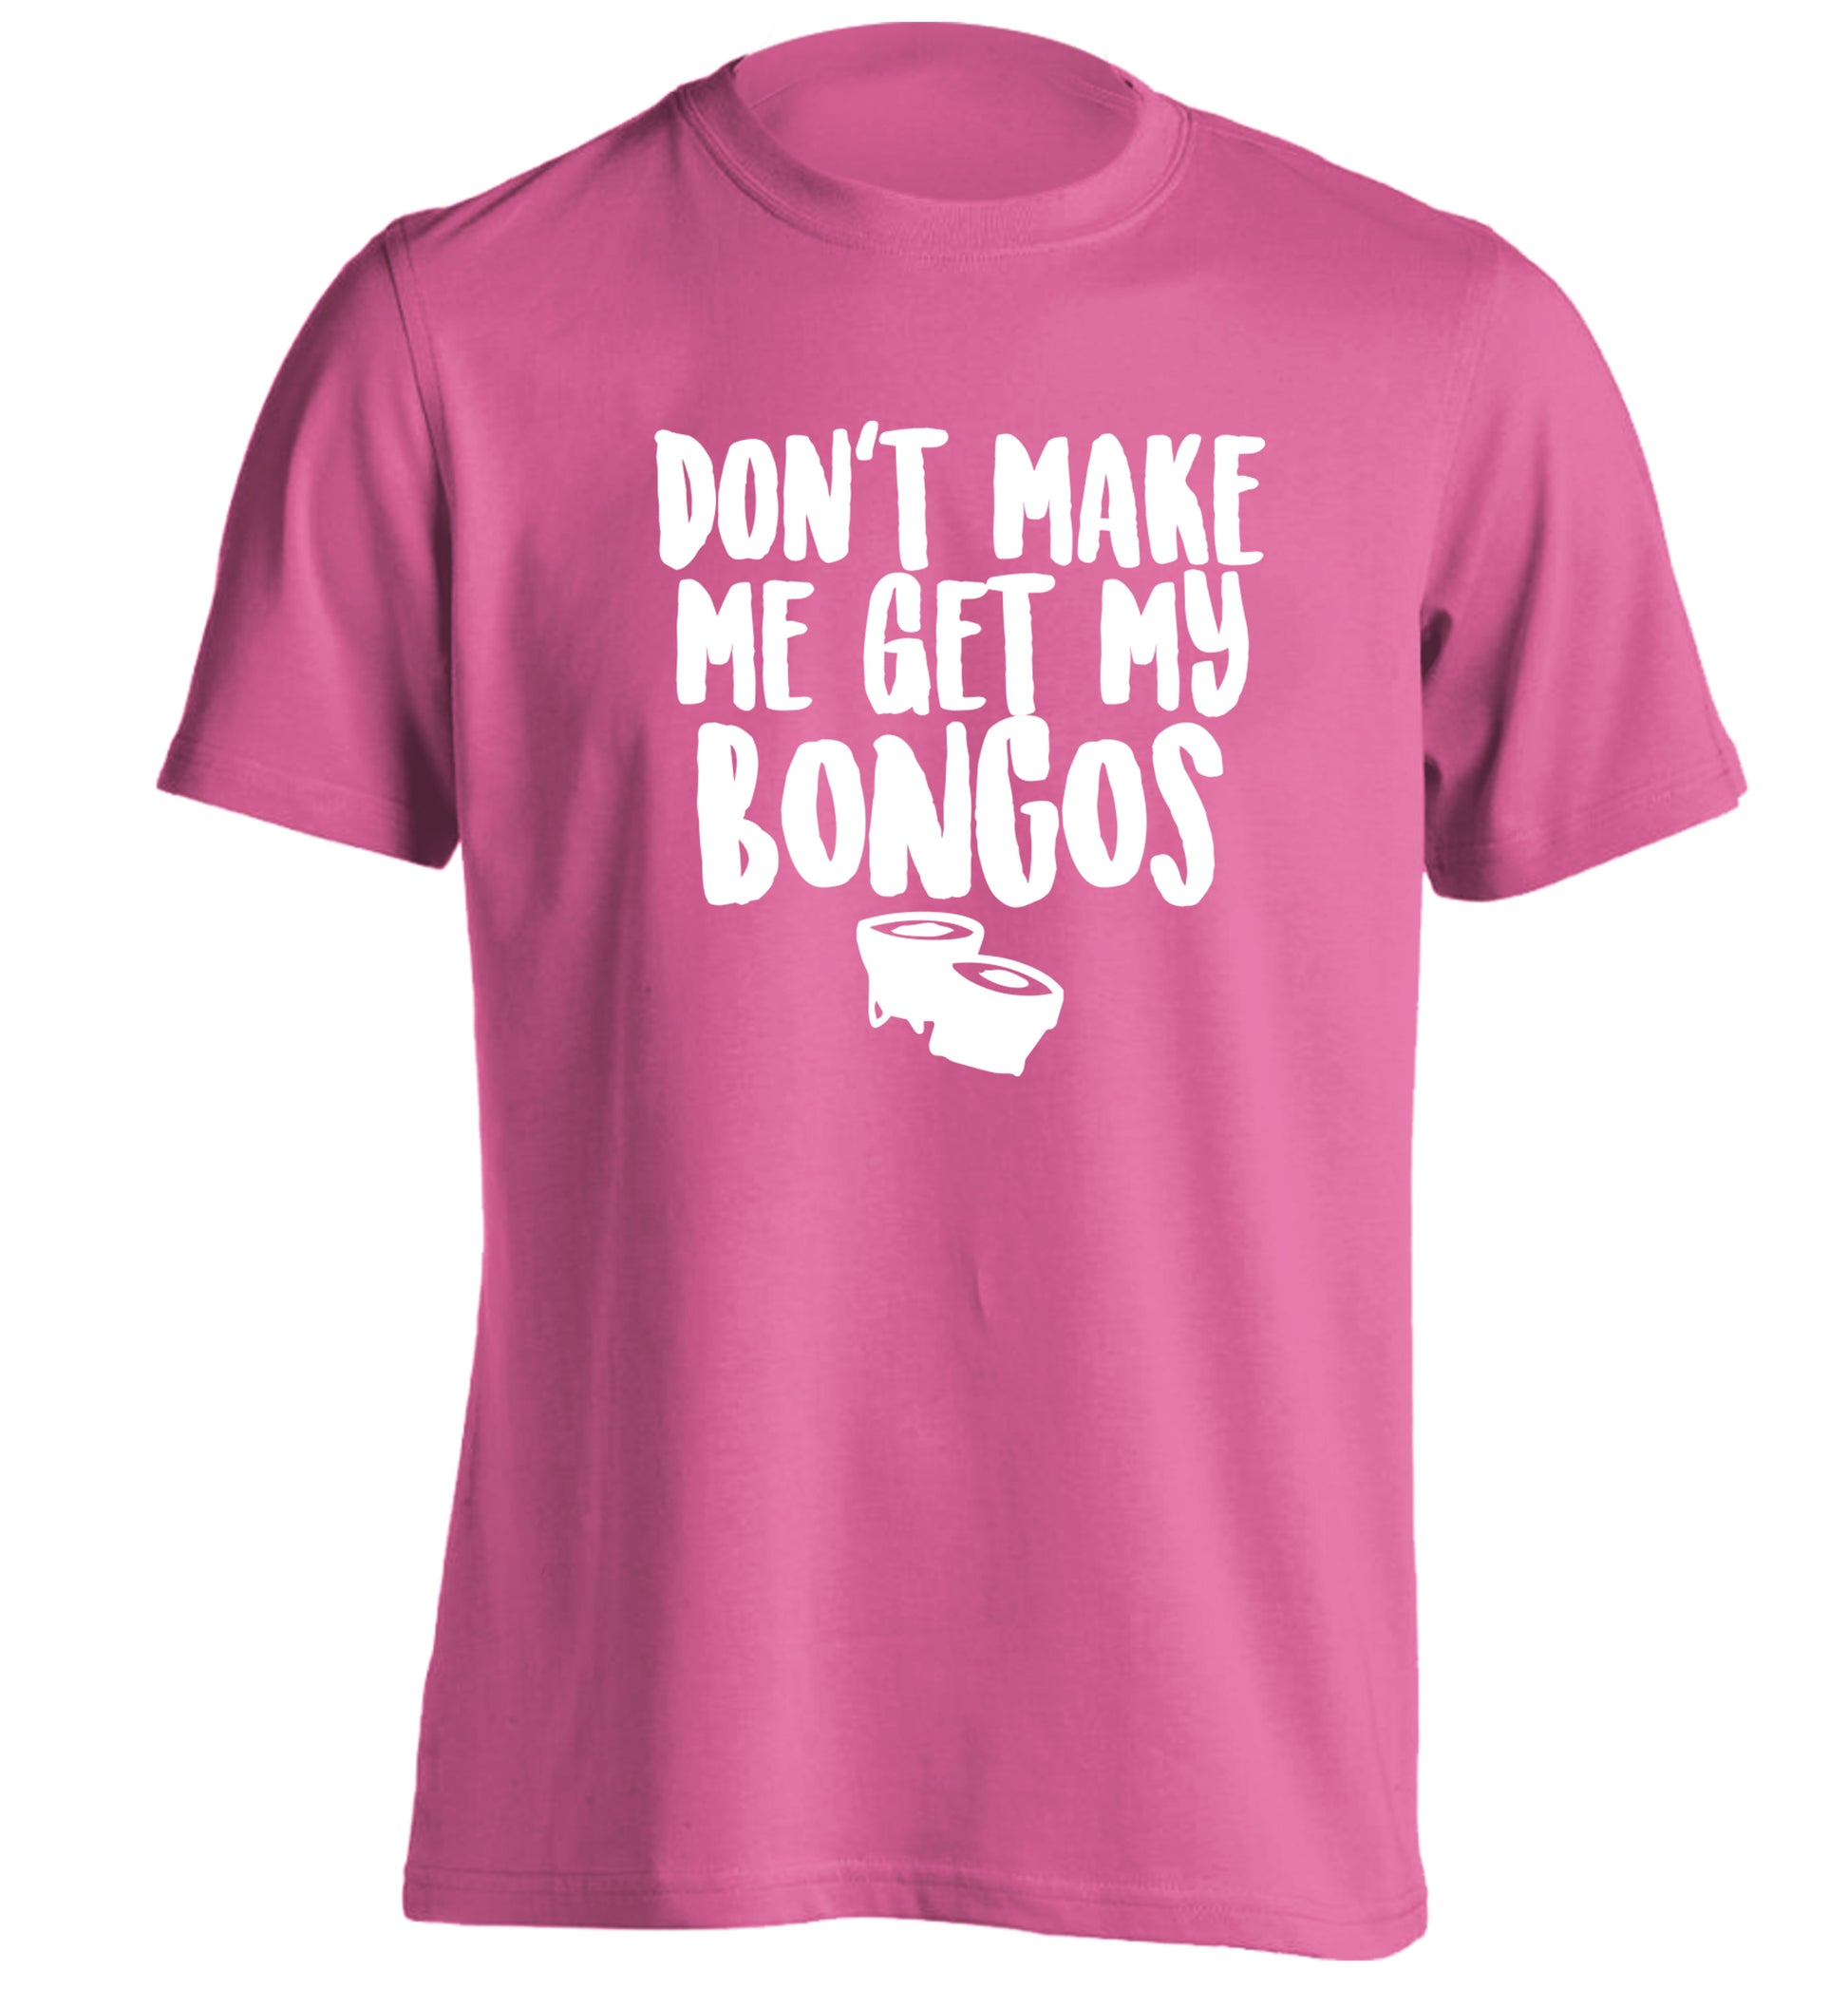 Don't make me get my bongos adults unisex pink Tshirt 2XL